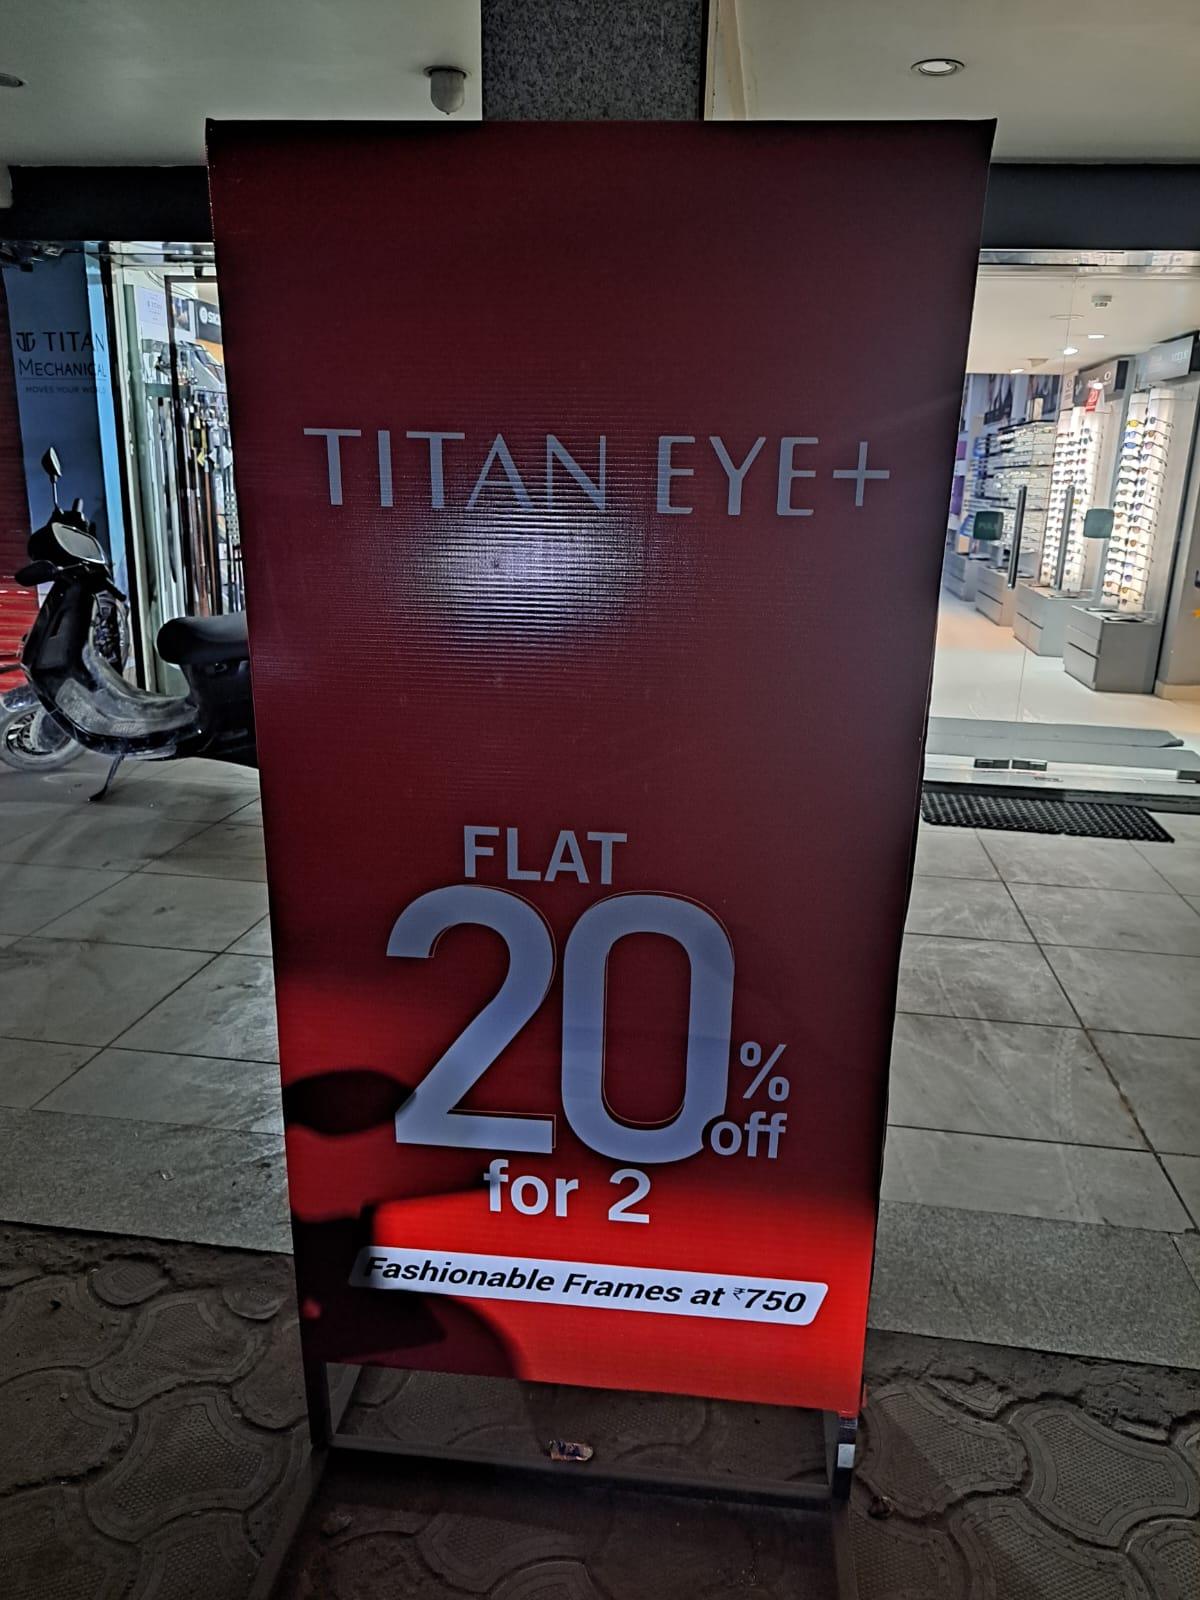 FLAT 20% Off For 2 Deal @Titan Eye +, Bhopal